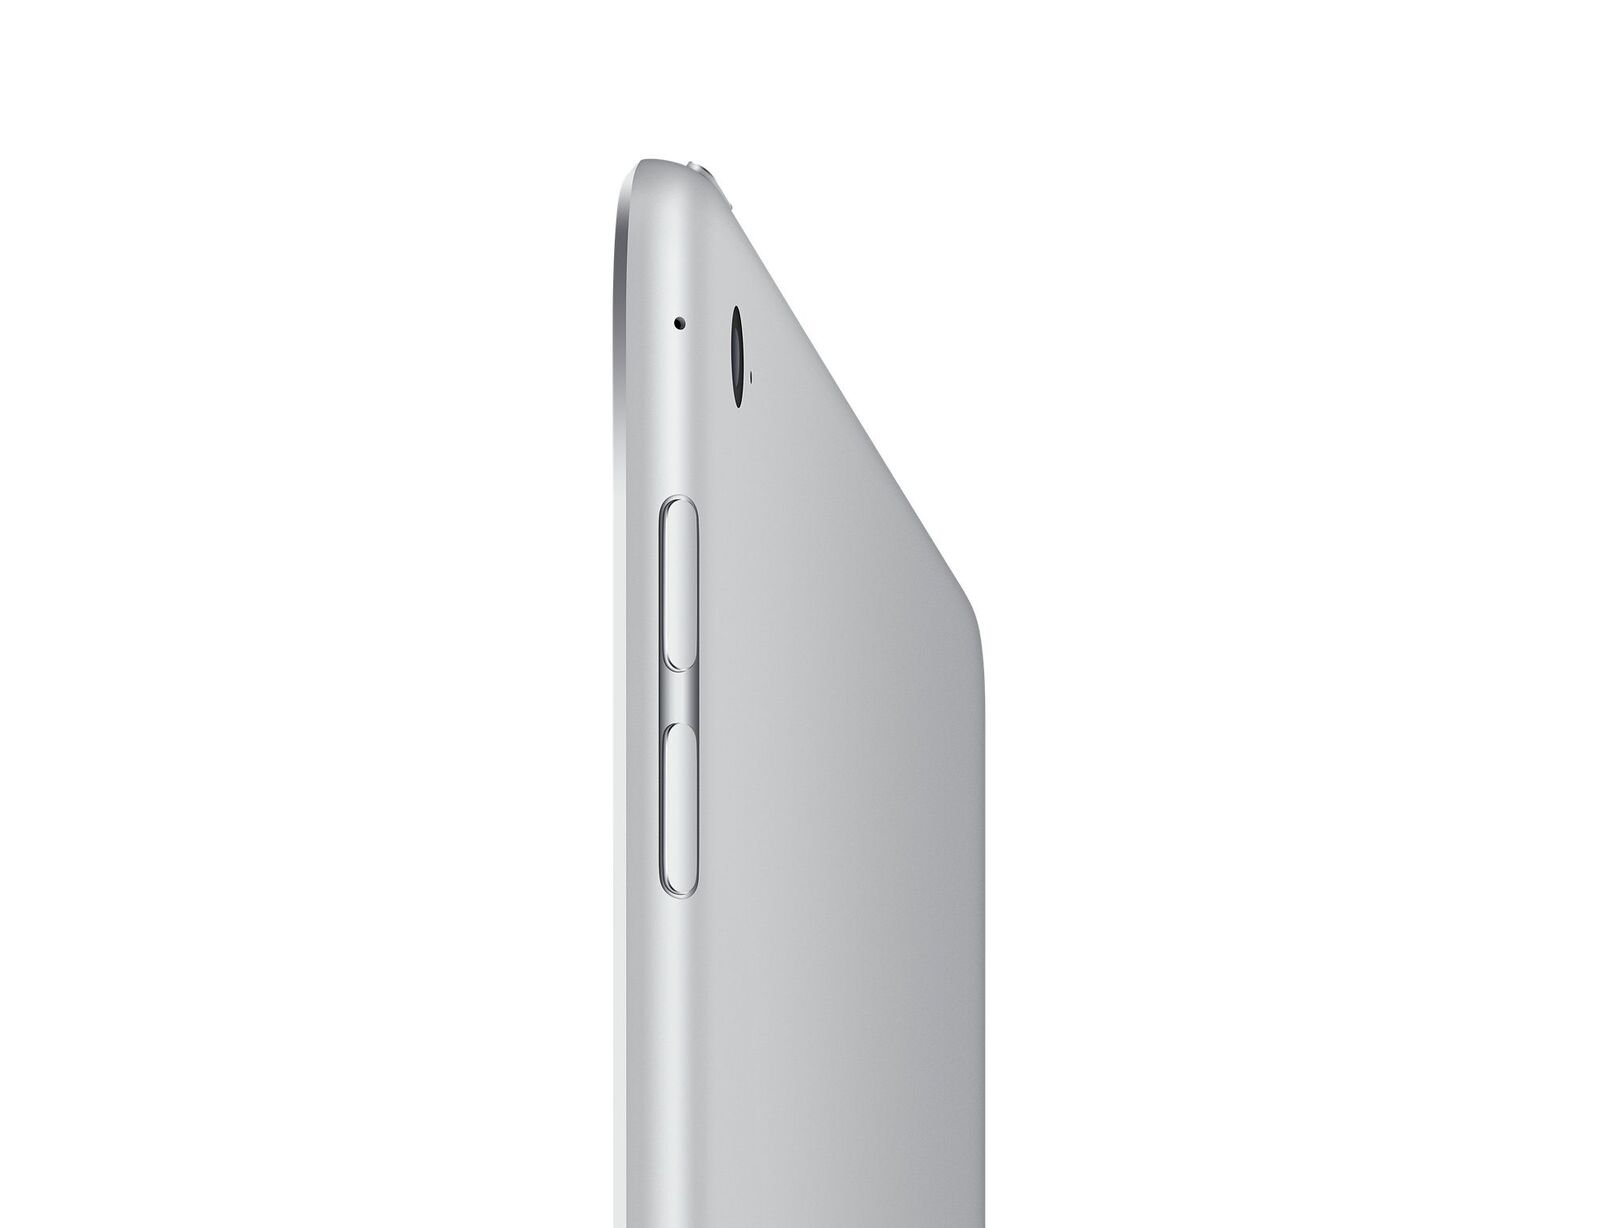 iPad Air 2 9.7 pulgadas Plata - Reacondicionado Apple Smart Generation